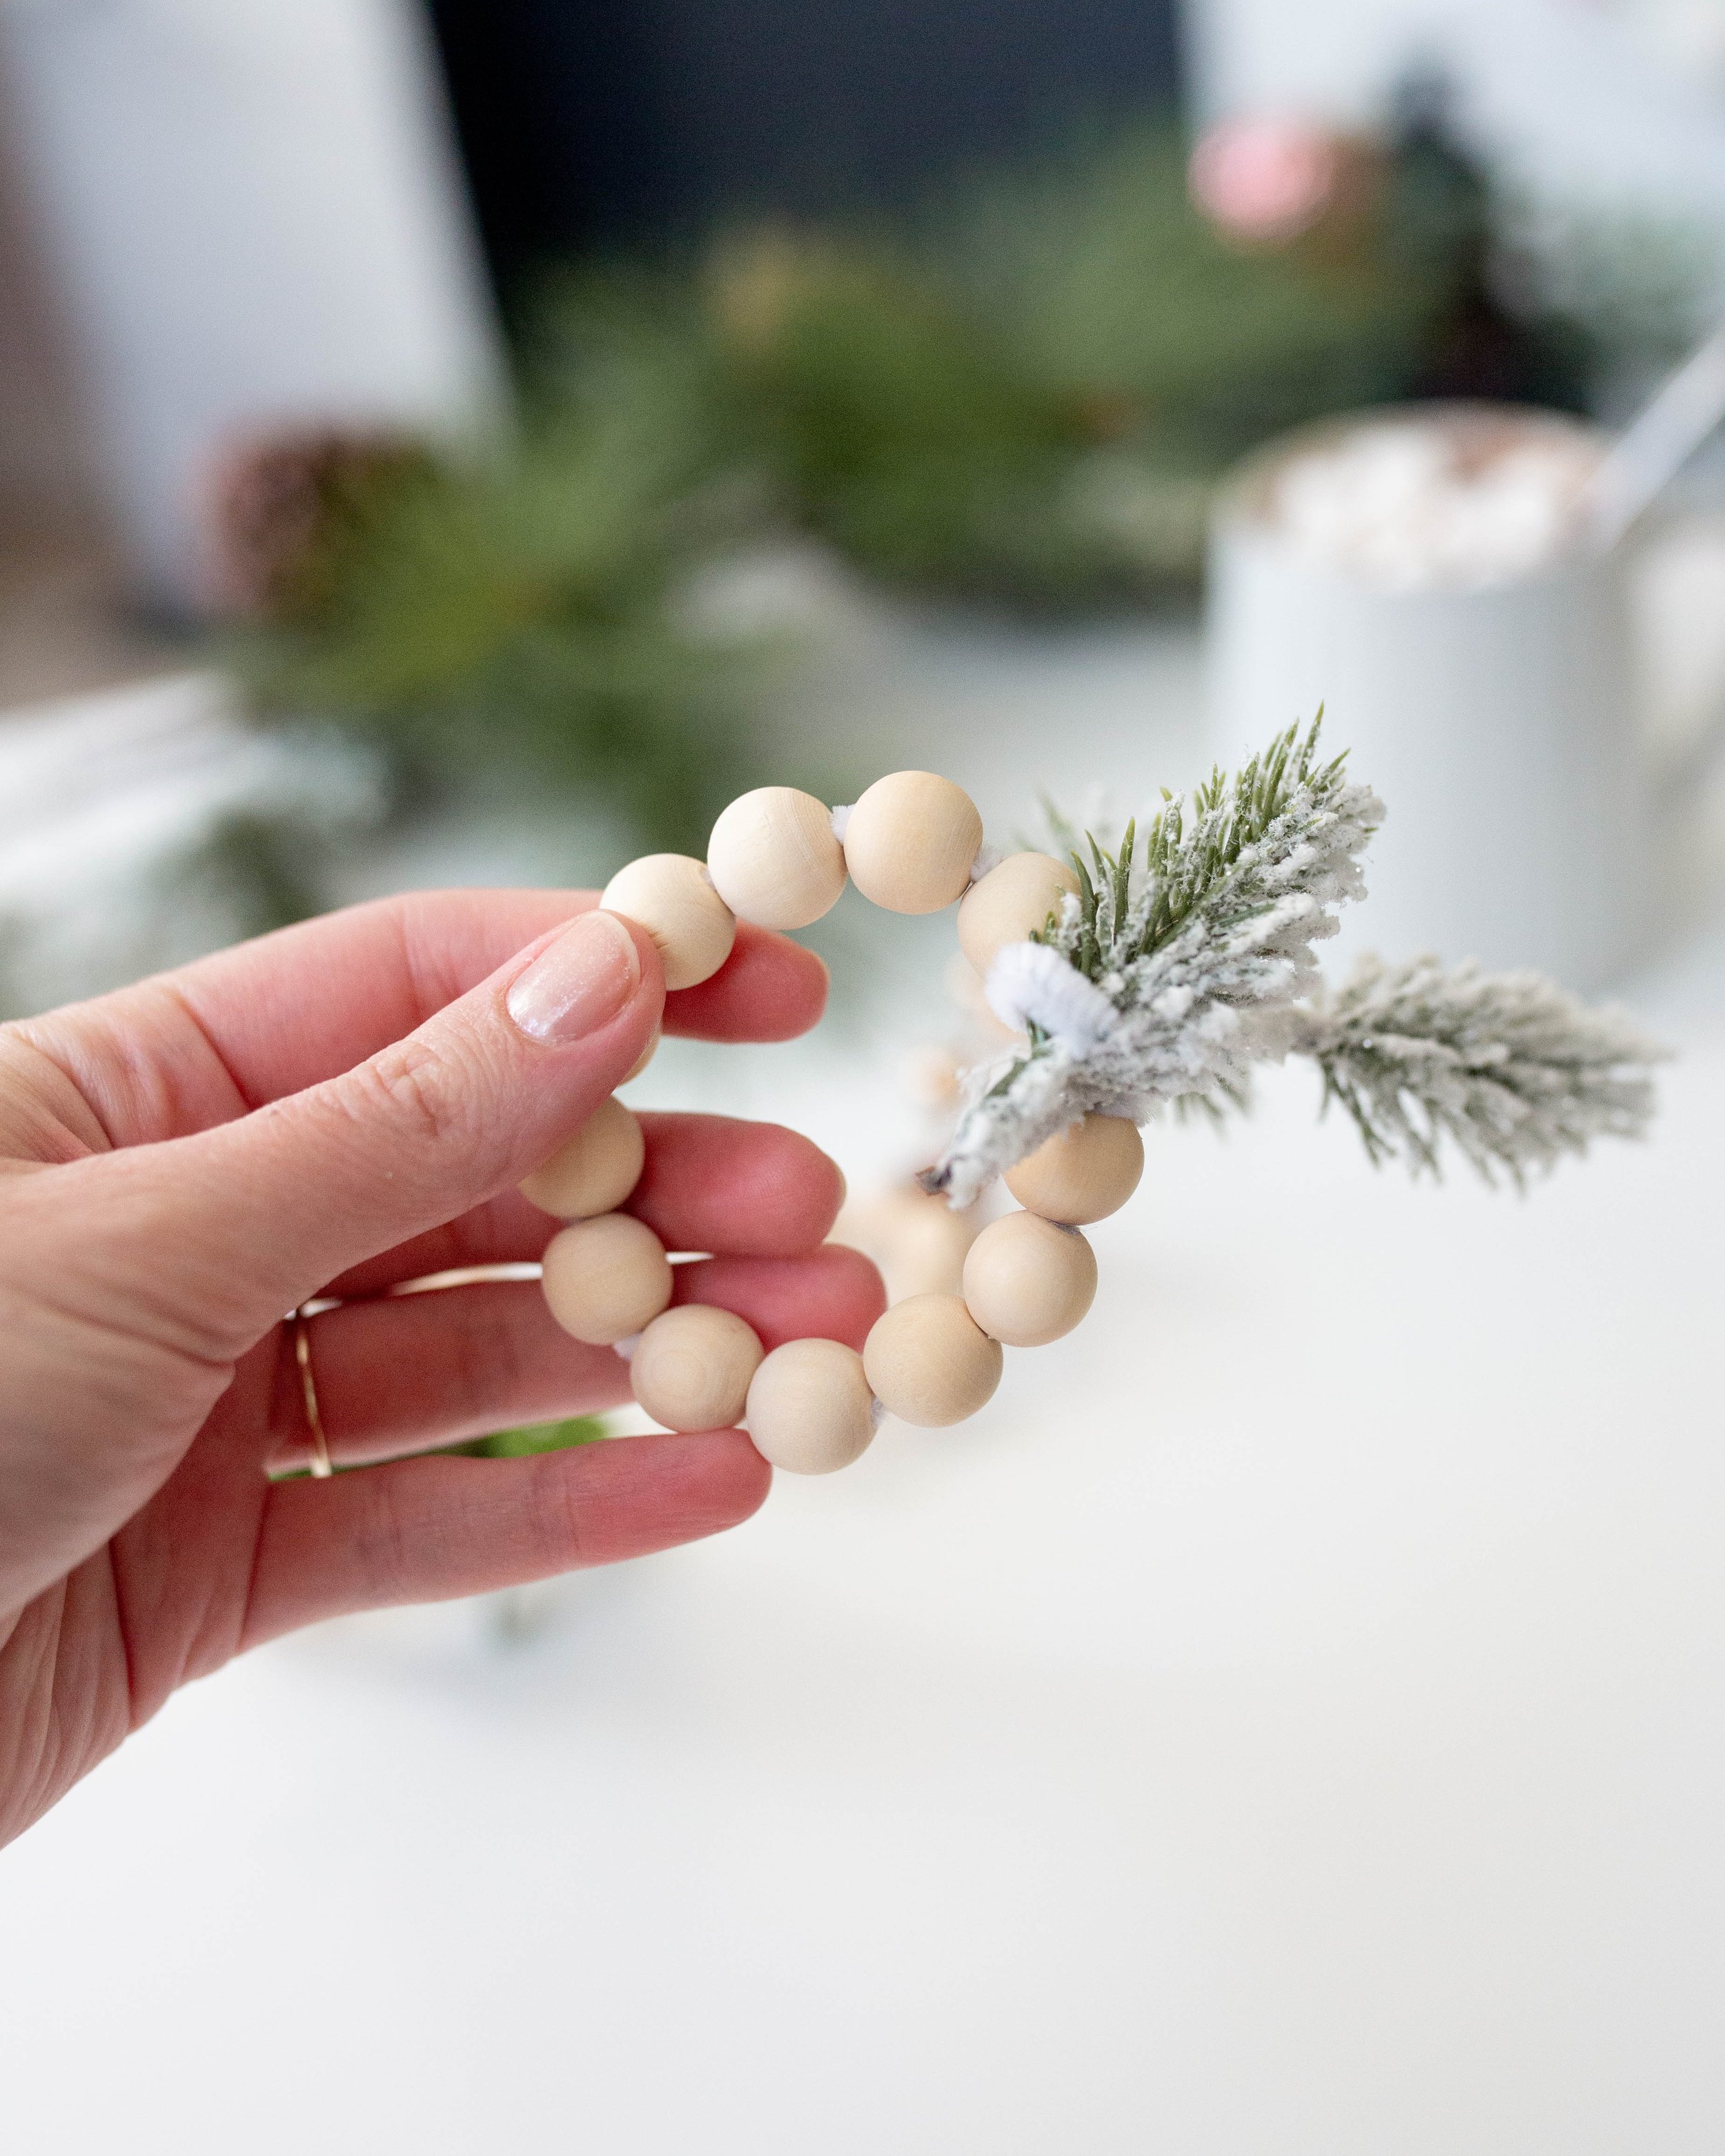 Make Easy DIY Napkin Rings And Cutlery Holders For Holidays! - Jennifer  Maker